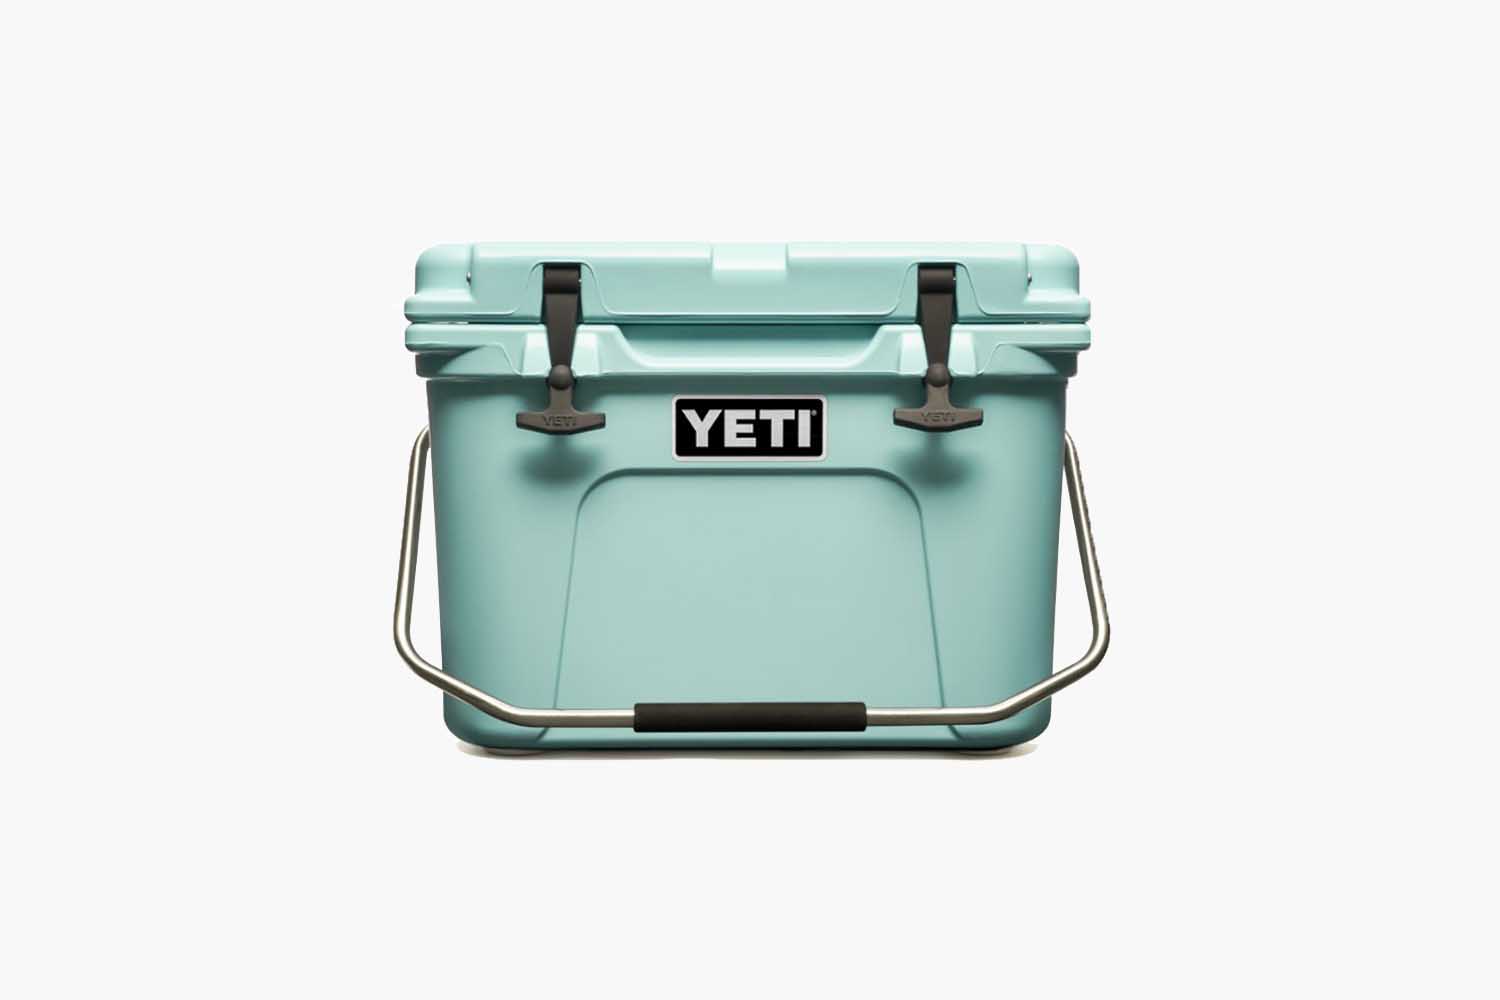 Deal: The YETI Roadie 20 Cooler Is on Sale